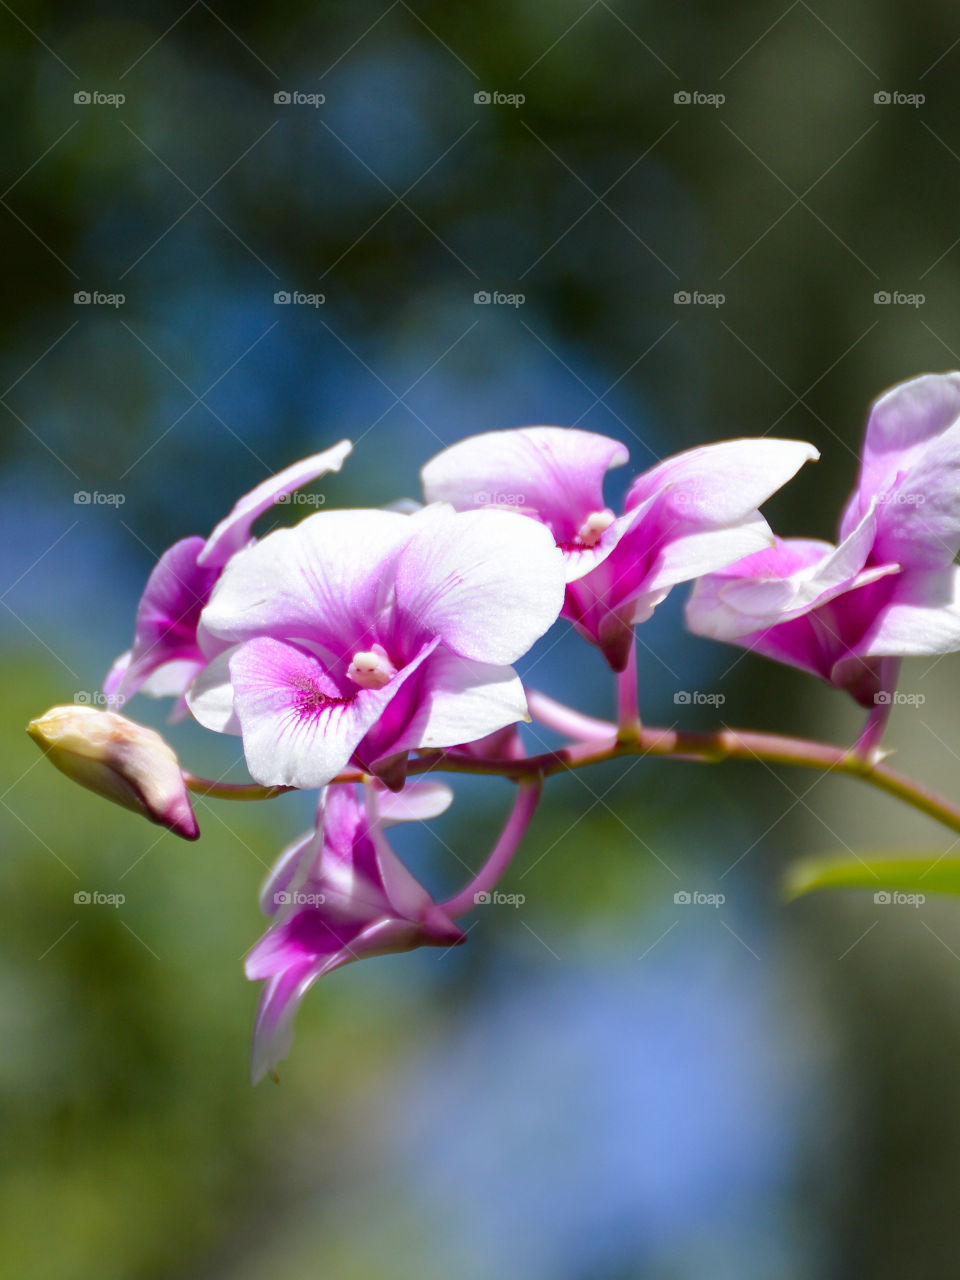 orchid flower in nature garden